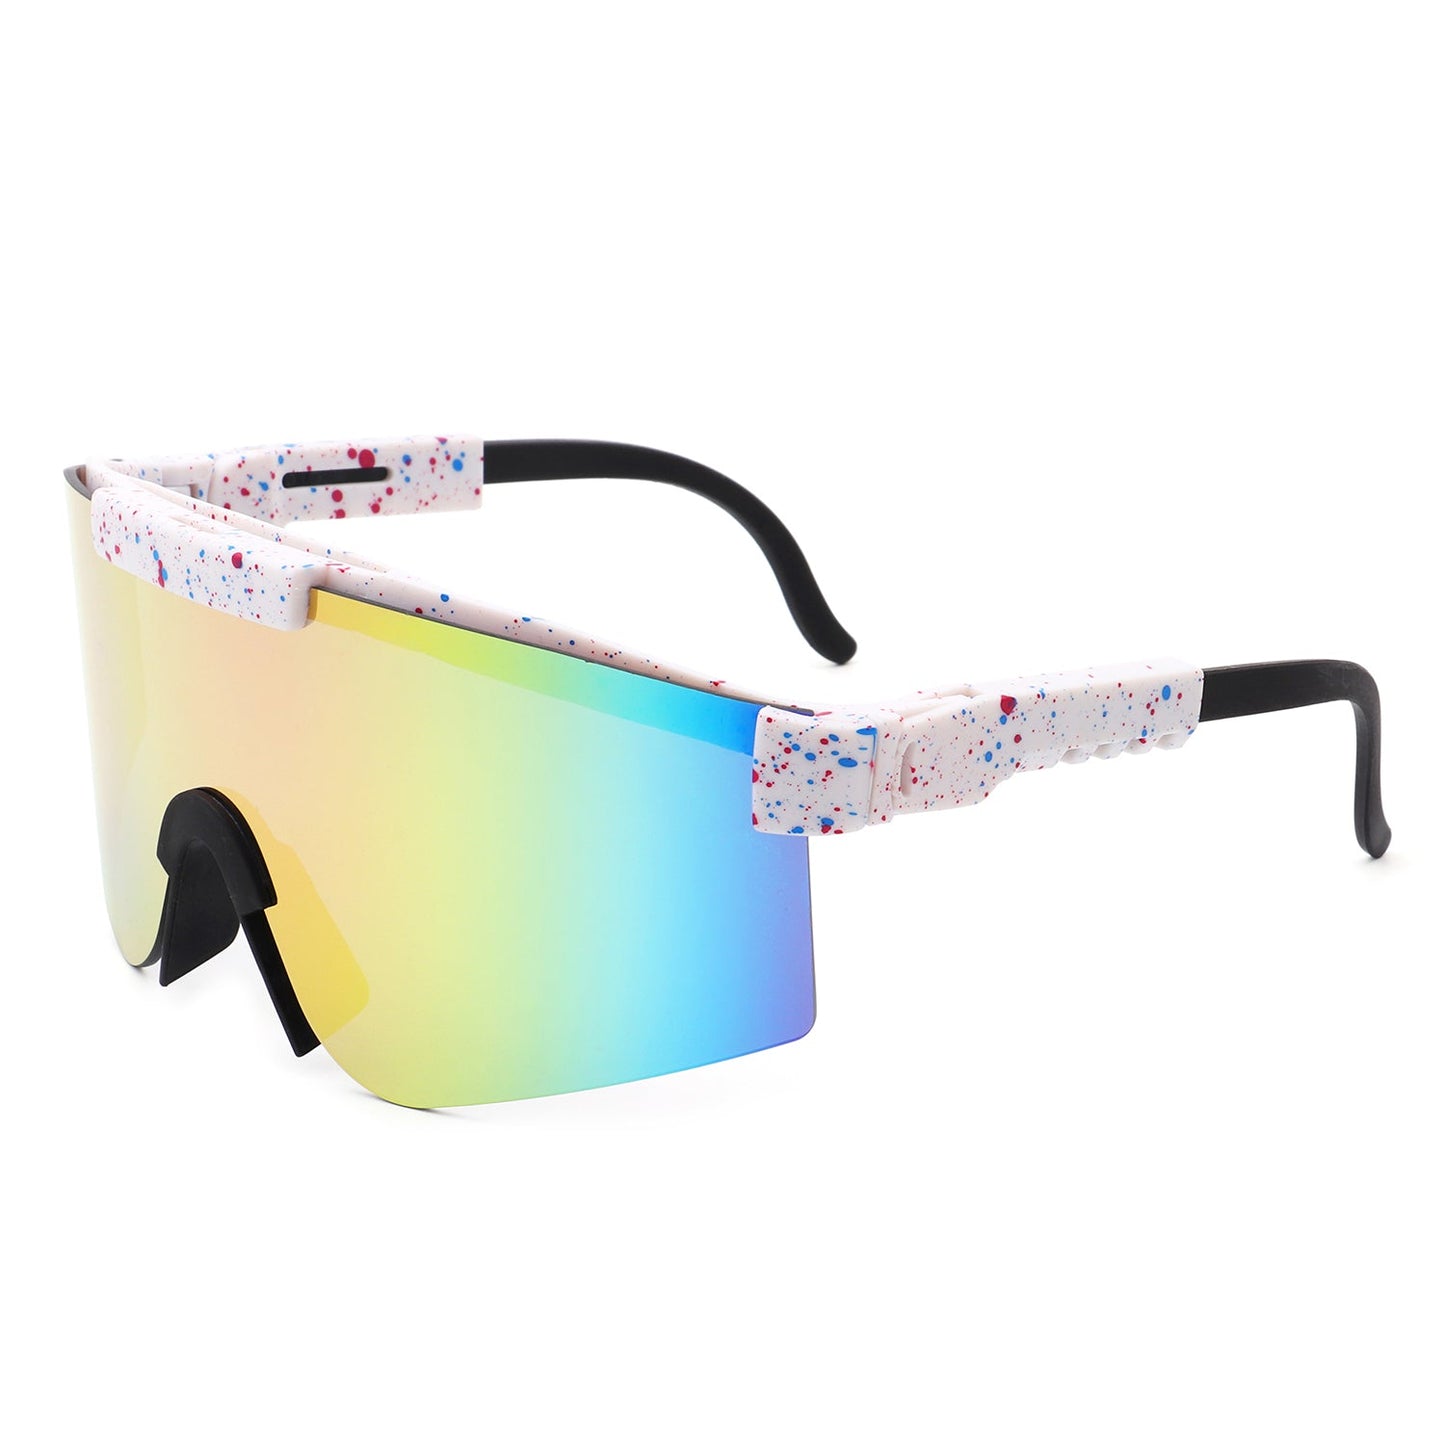 Visor sunglasses - neutral colors